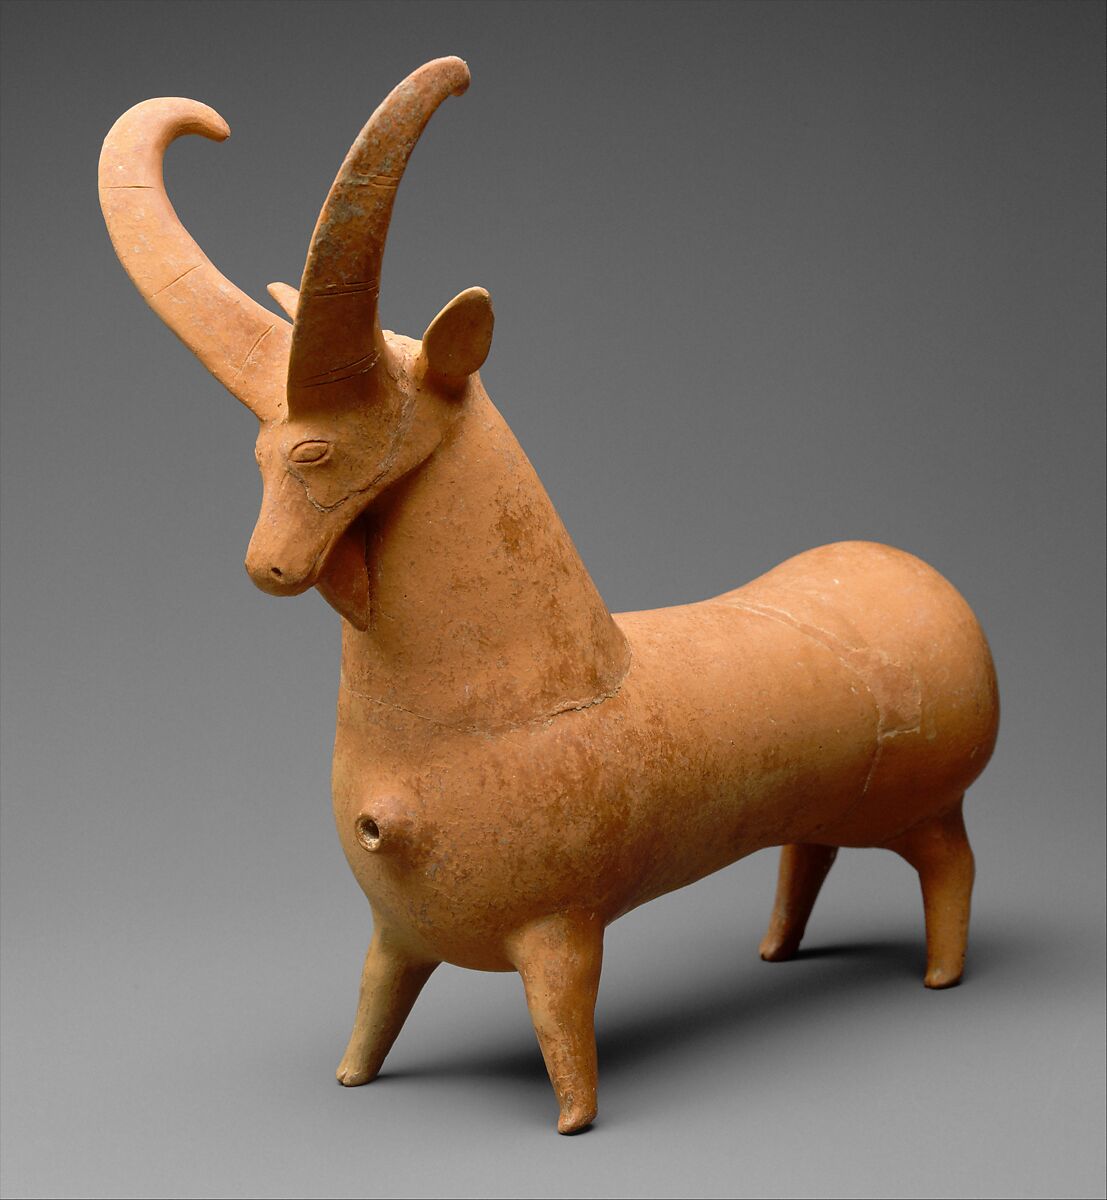 Rhyton in the shape of an ibex, Ceramic, Iran 